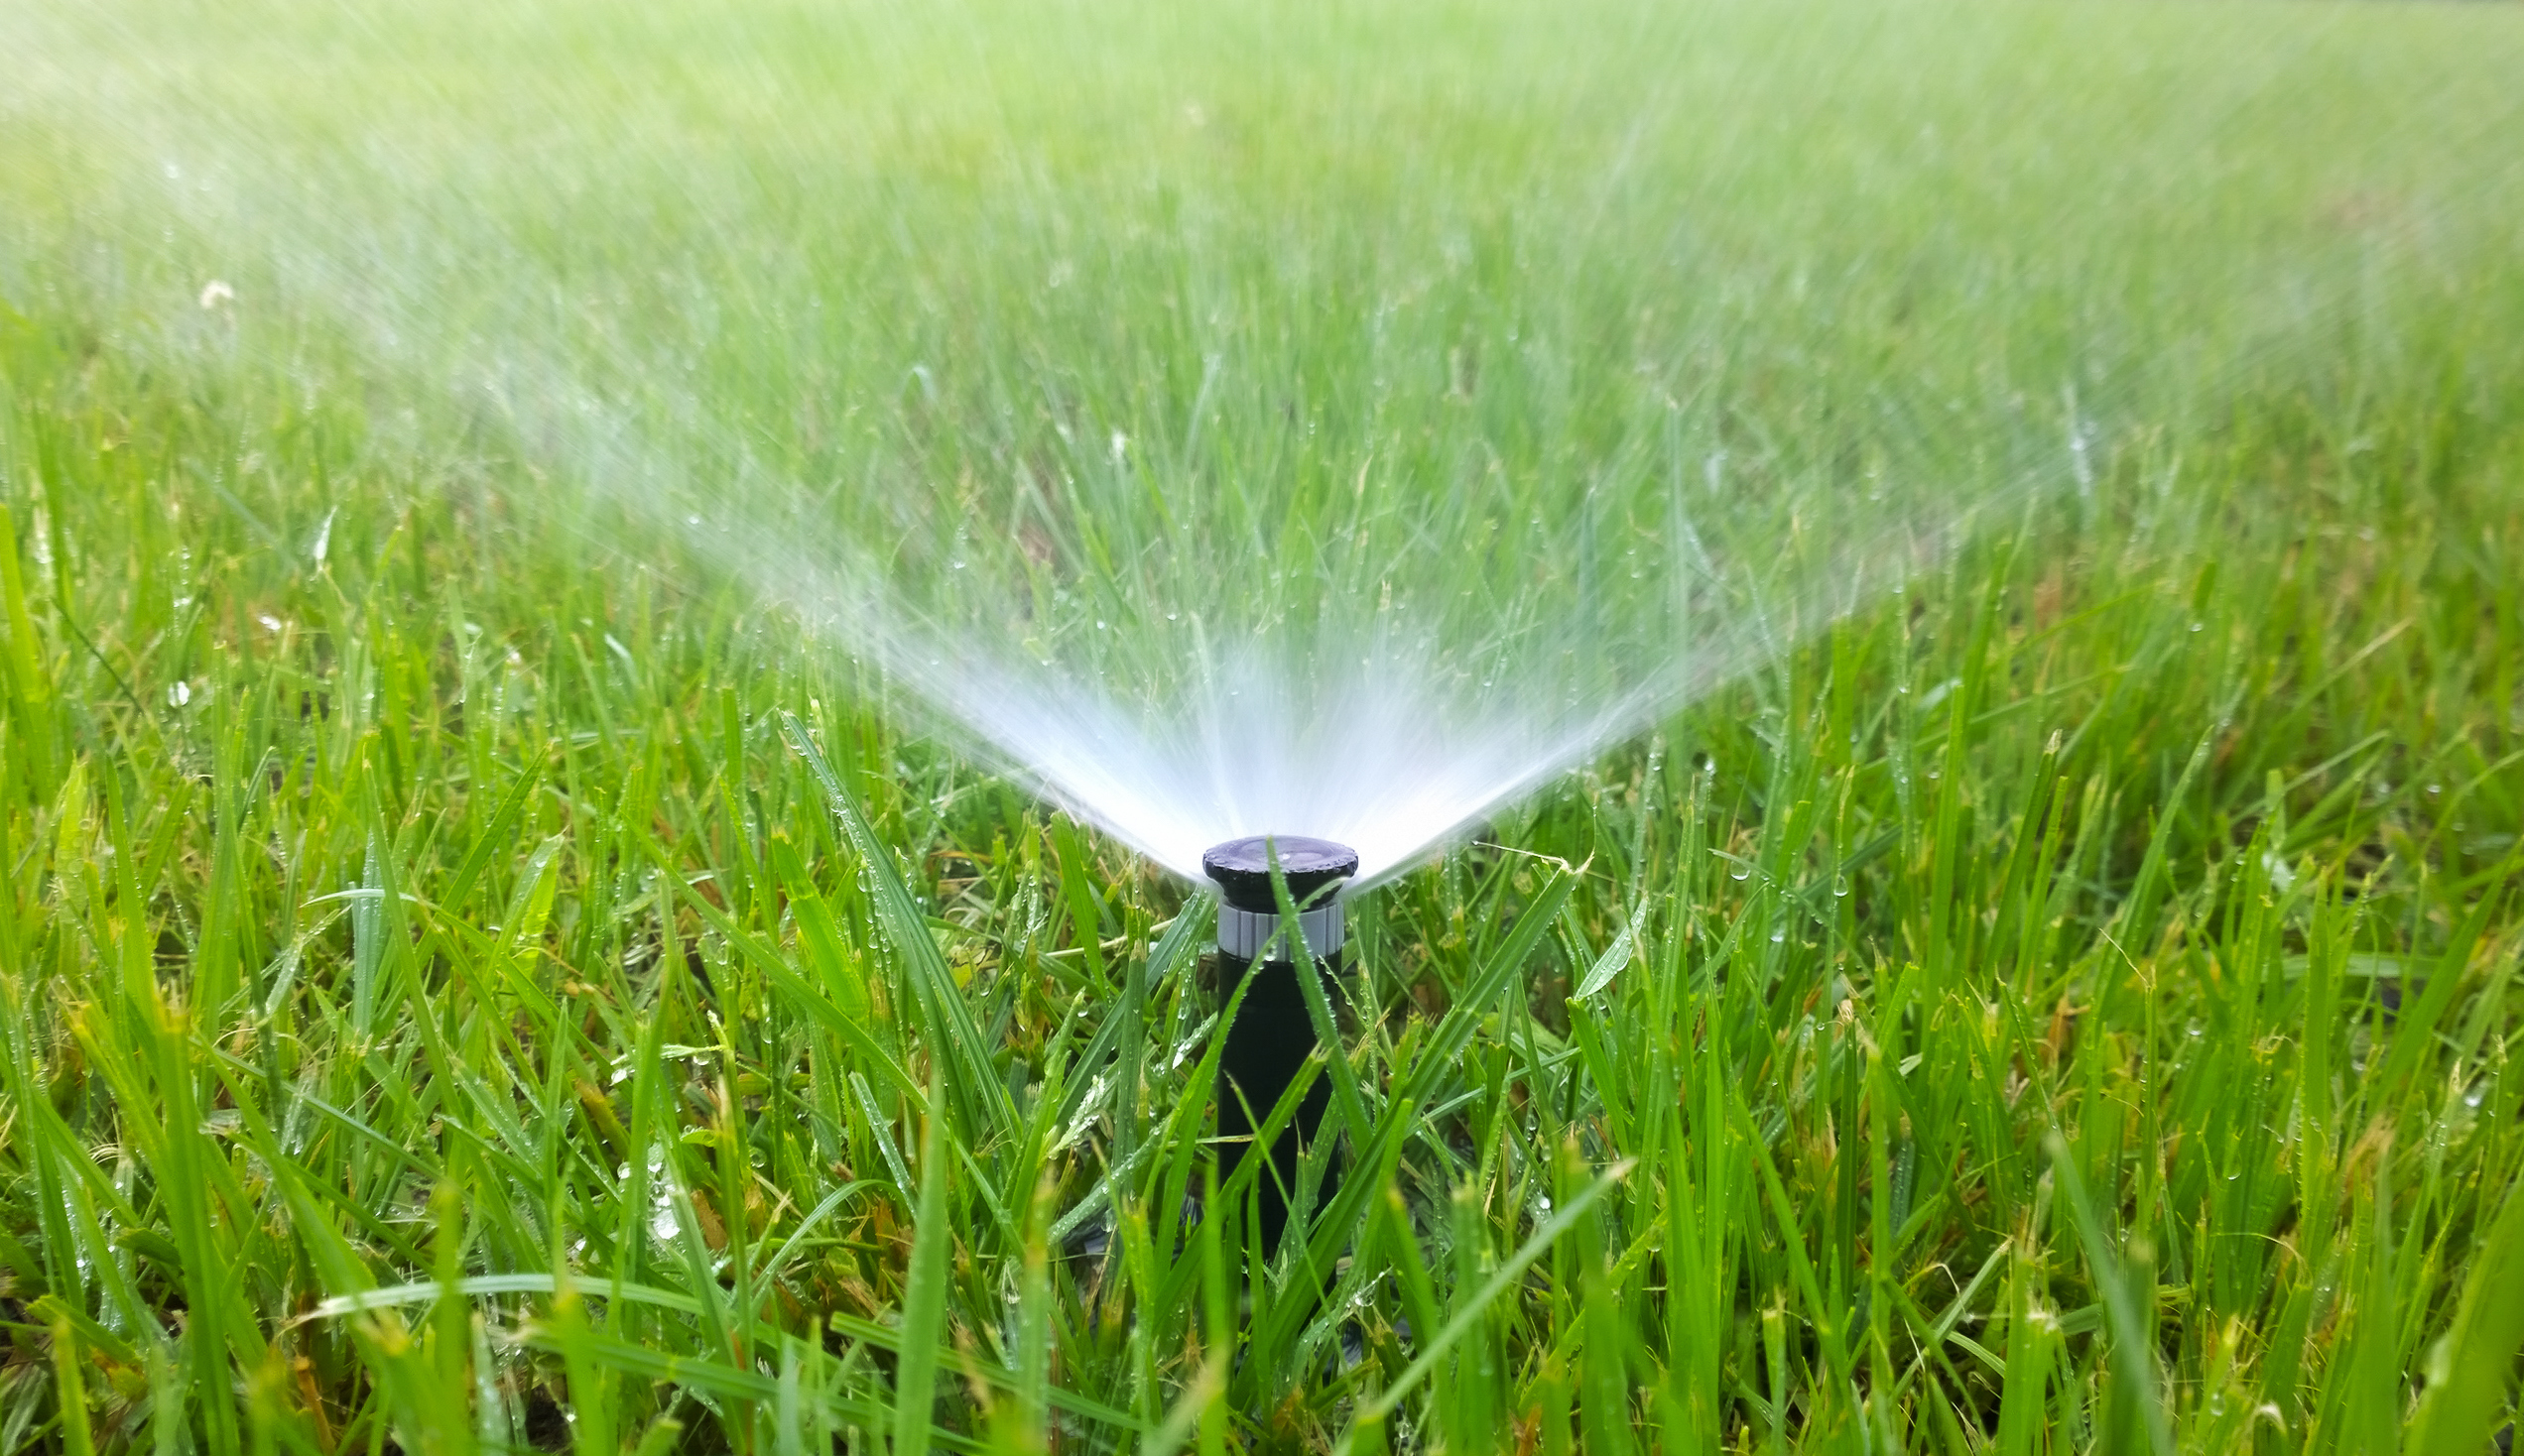 A sprinkler on a lawn